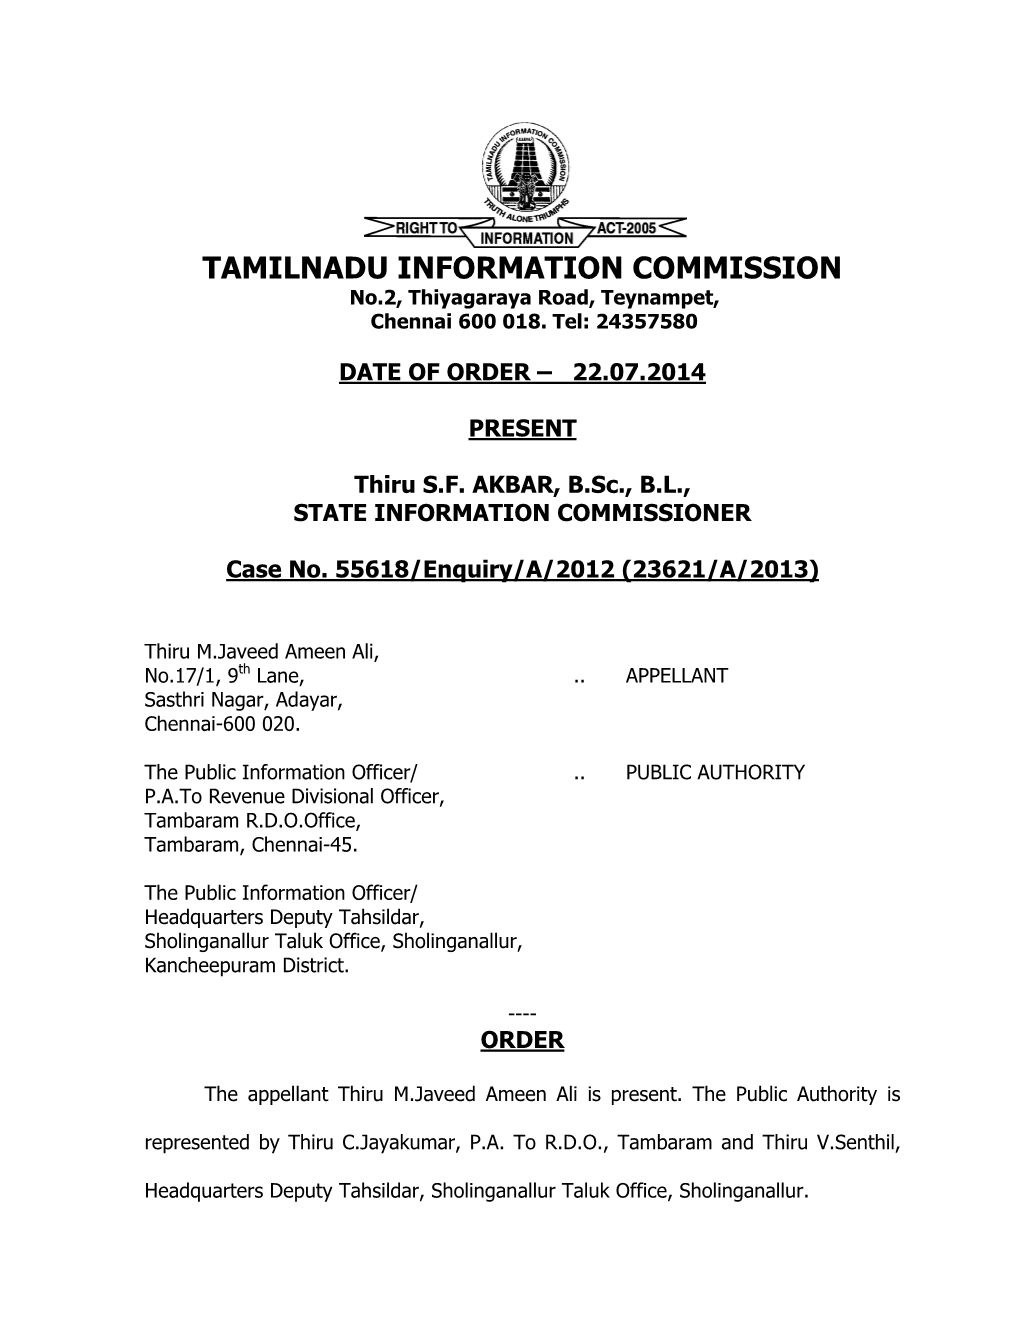 TAMILNADU INFORMATION COMMISSION No.2, Thiyagaraya Road, Teynampet, Chennai 600 018